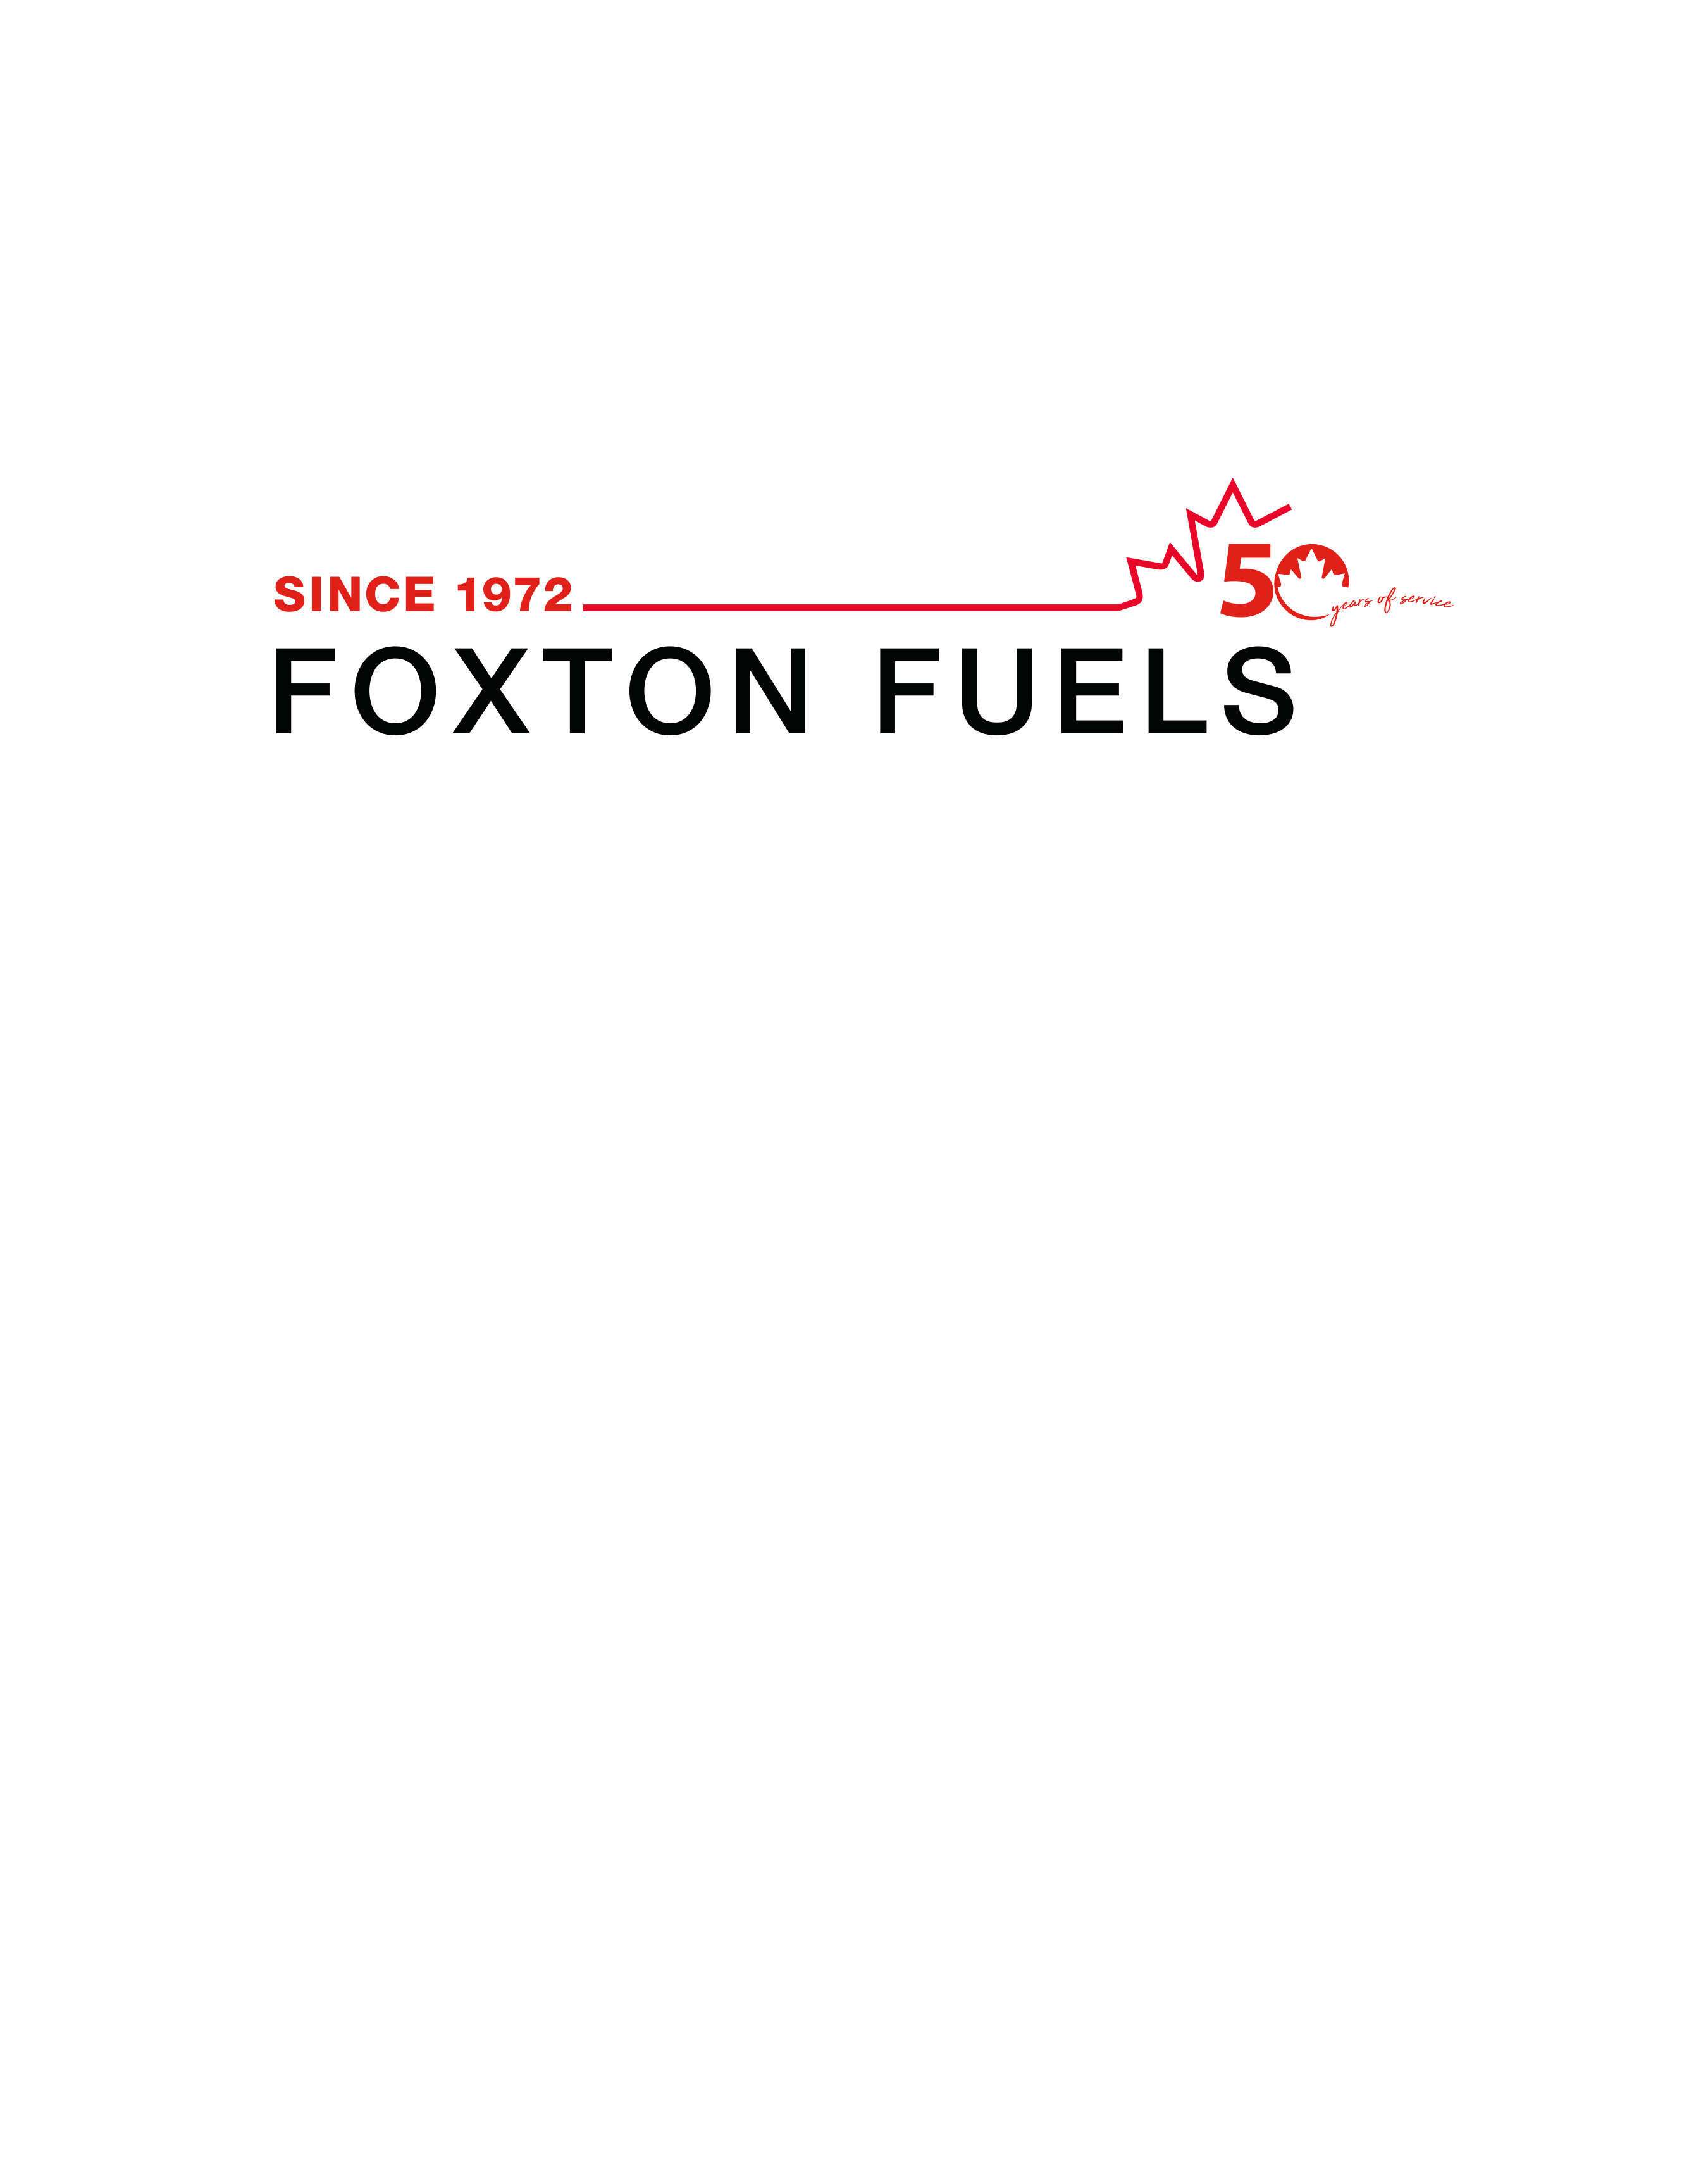 Foxton Fuels